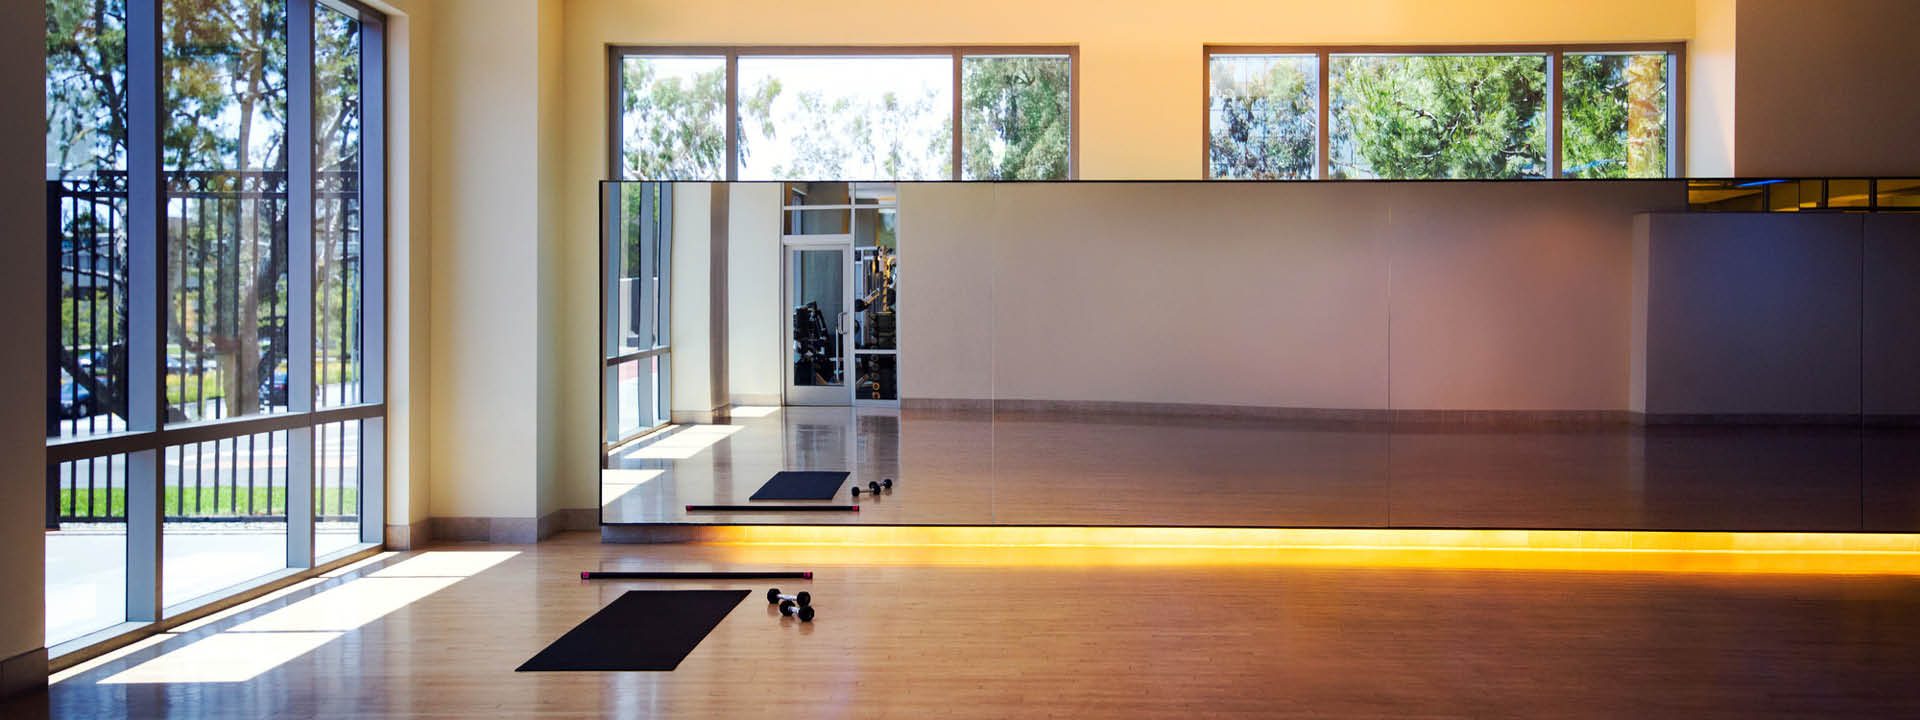 Gym in Newport Beach: Best Fitness Club with Pilates & Yoga Studios